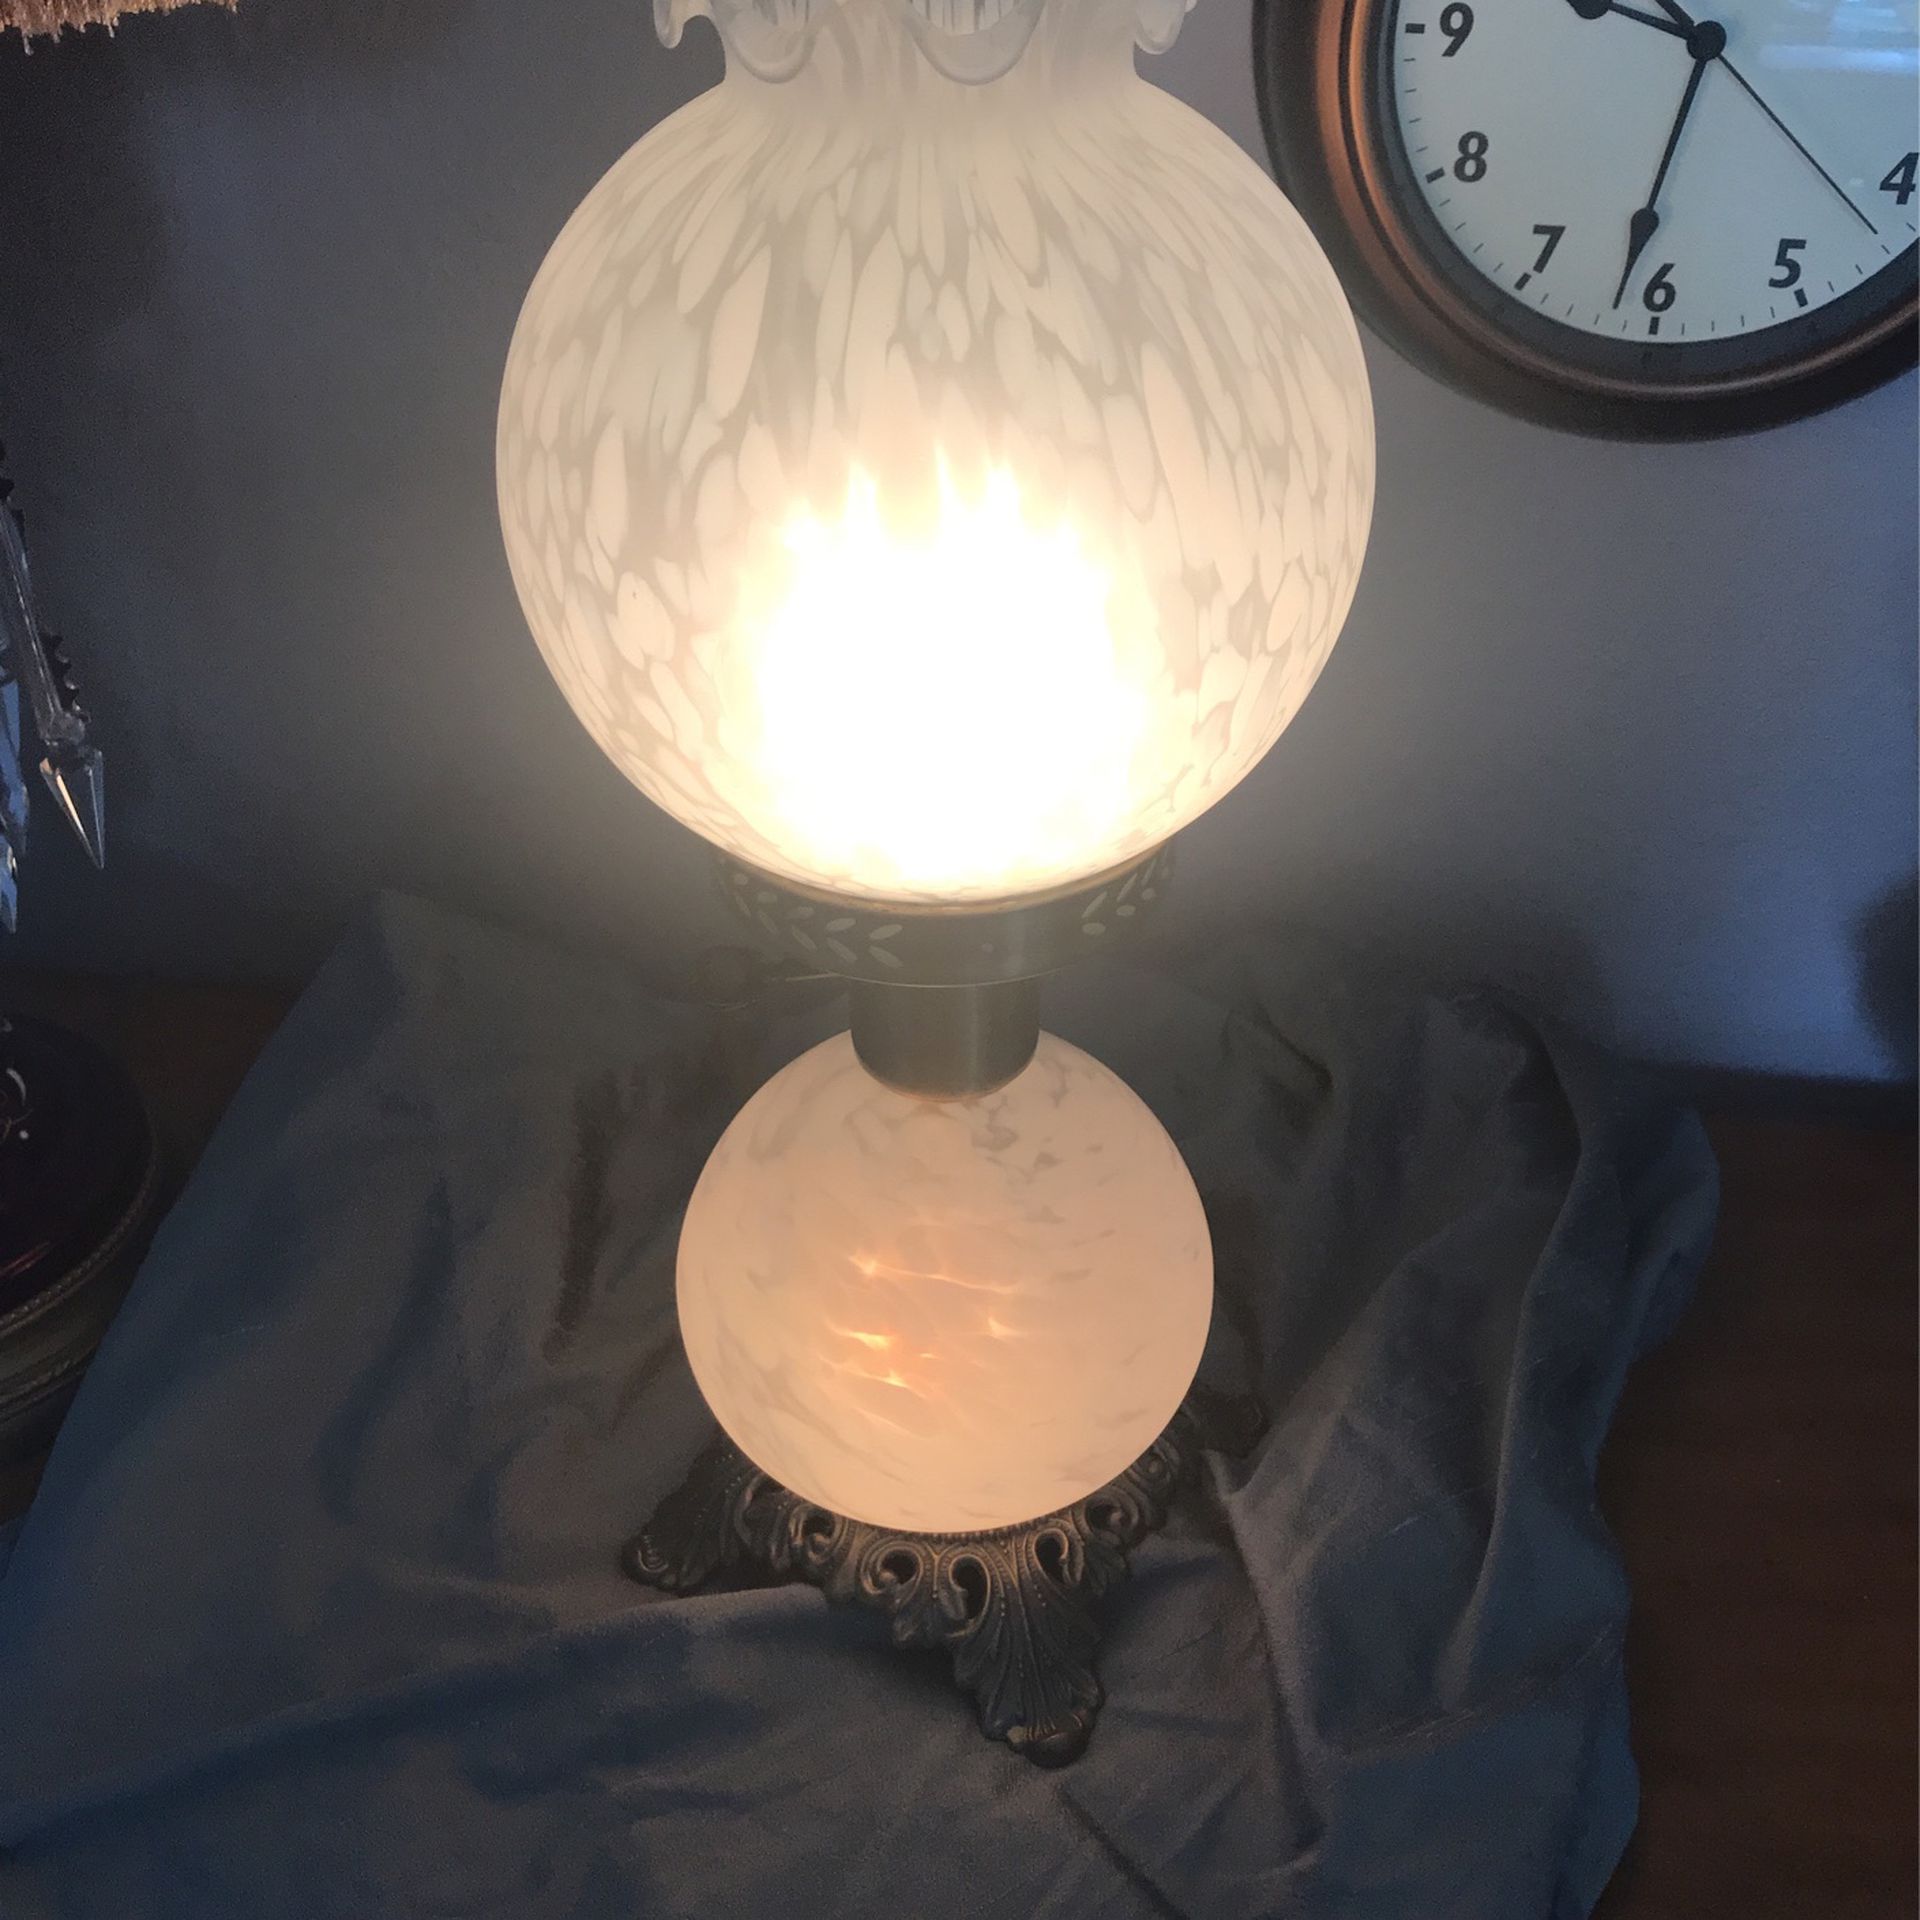 Vintage Style 50’s Lamp - Lights 3 Ways